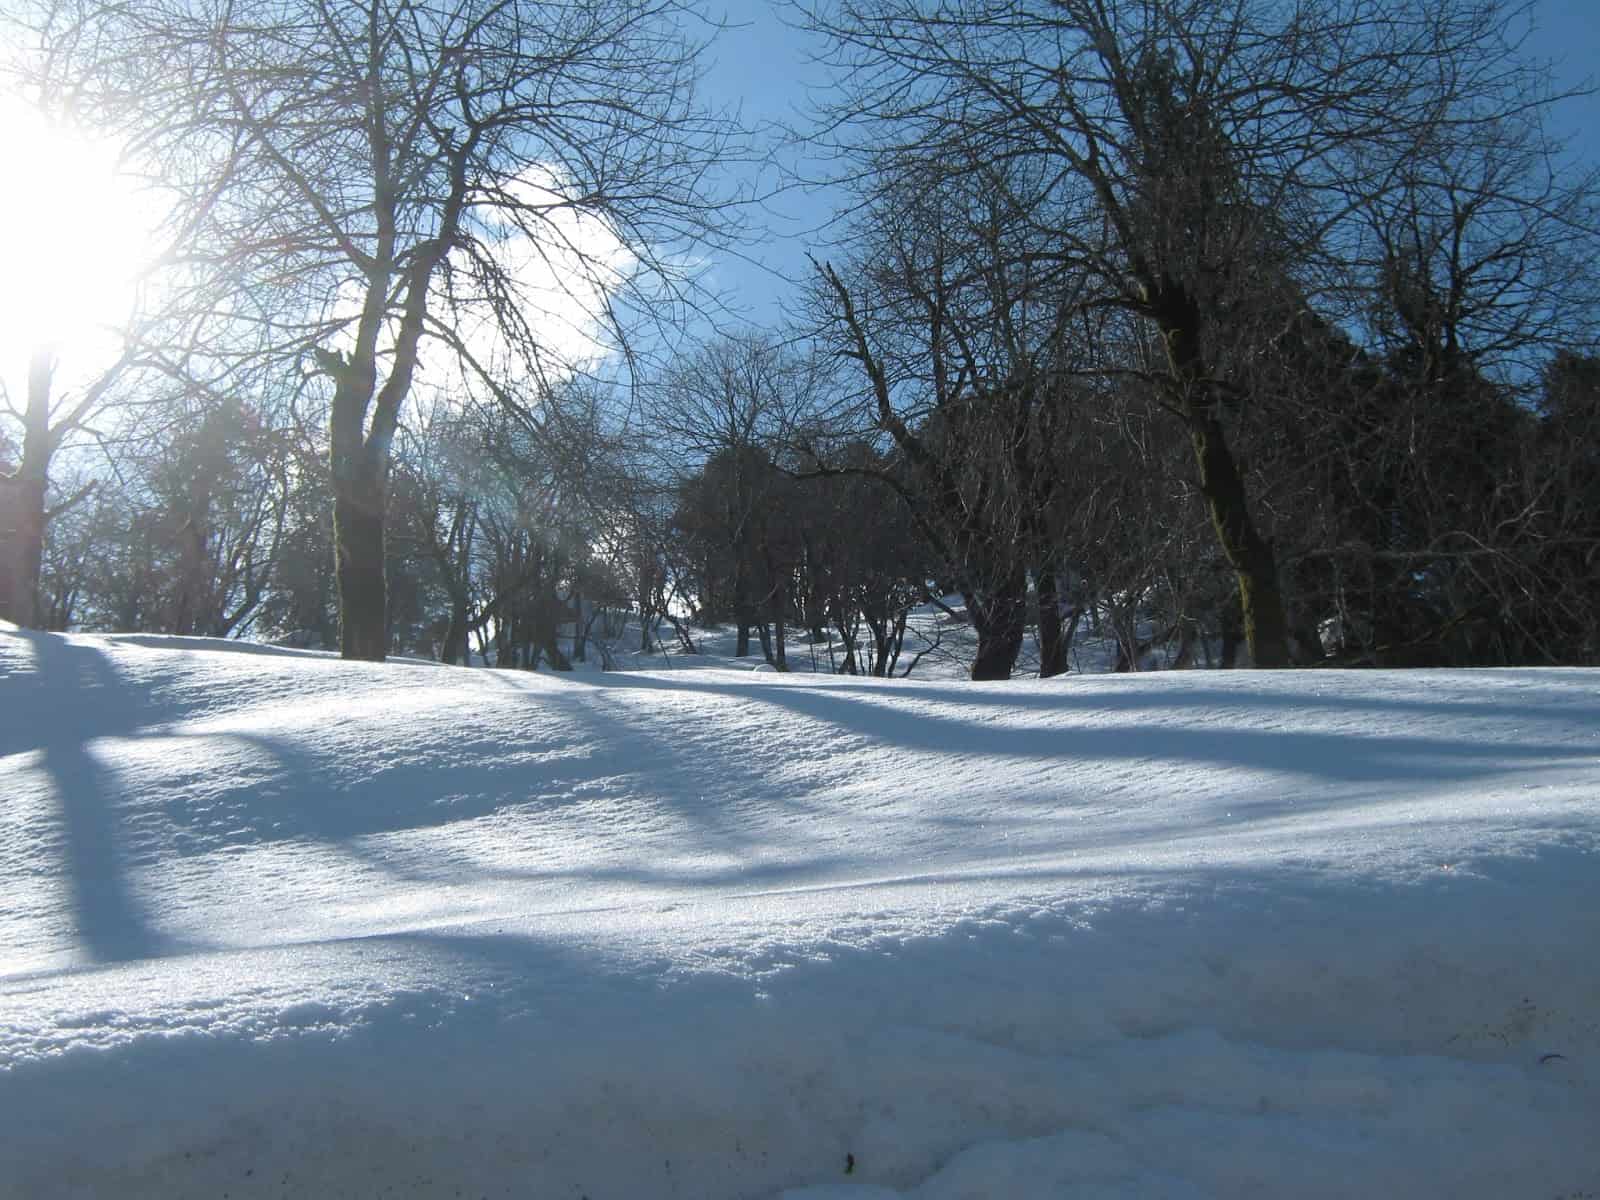 Jalori Pass - Shoja, a place to enjoy Snowfall near Delhi